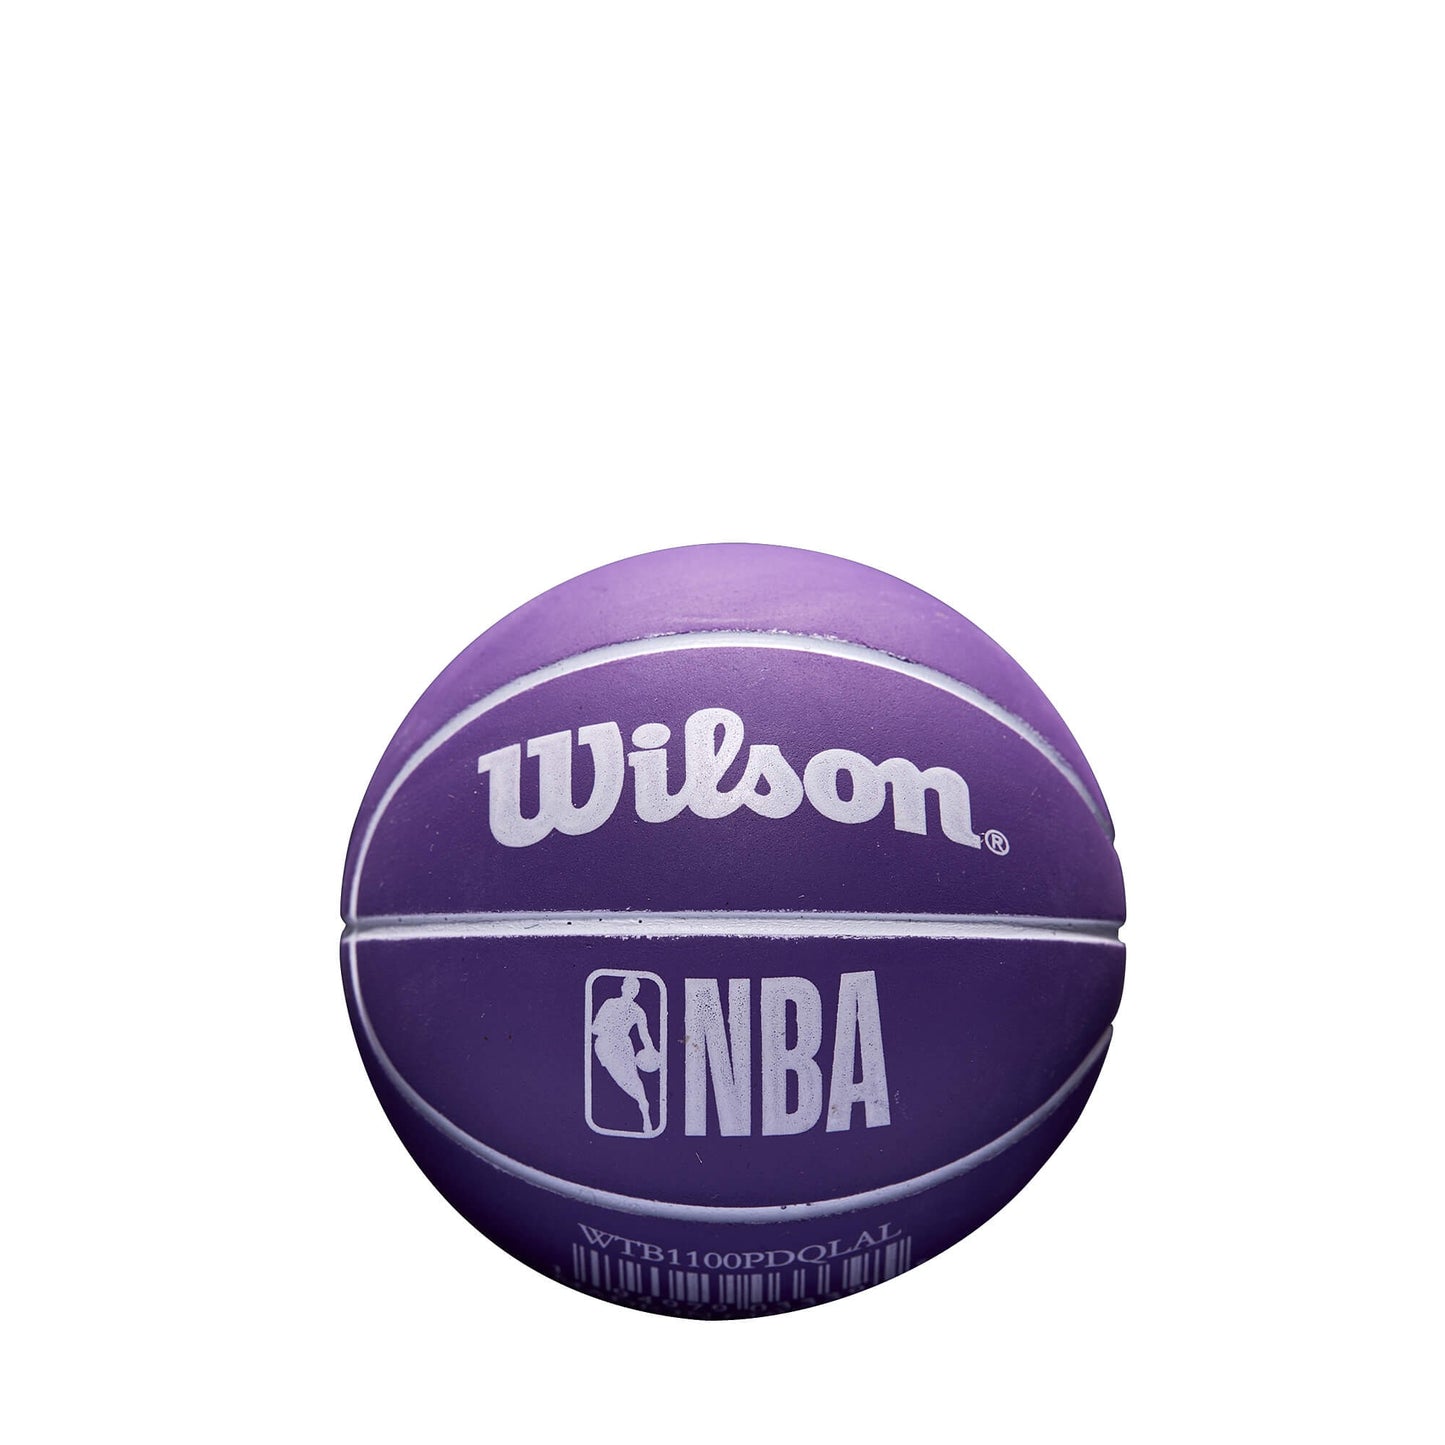 Wilson NBA Dribbler Basketball Los Angeles Lakers (sz. super mini)